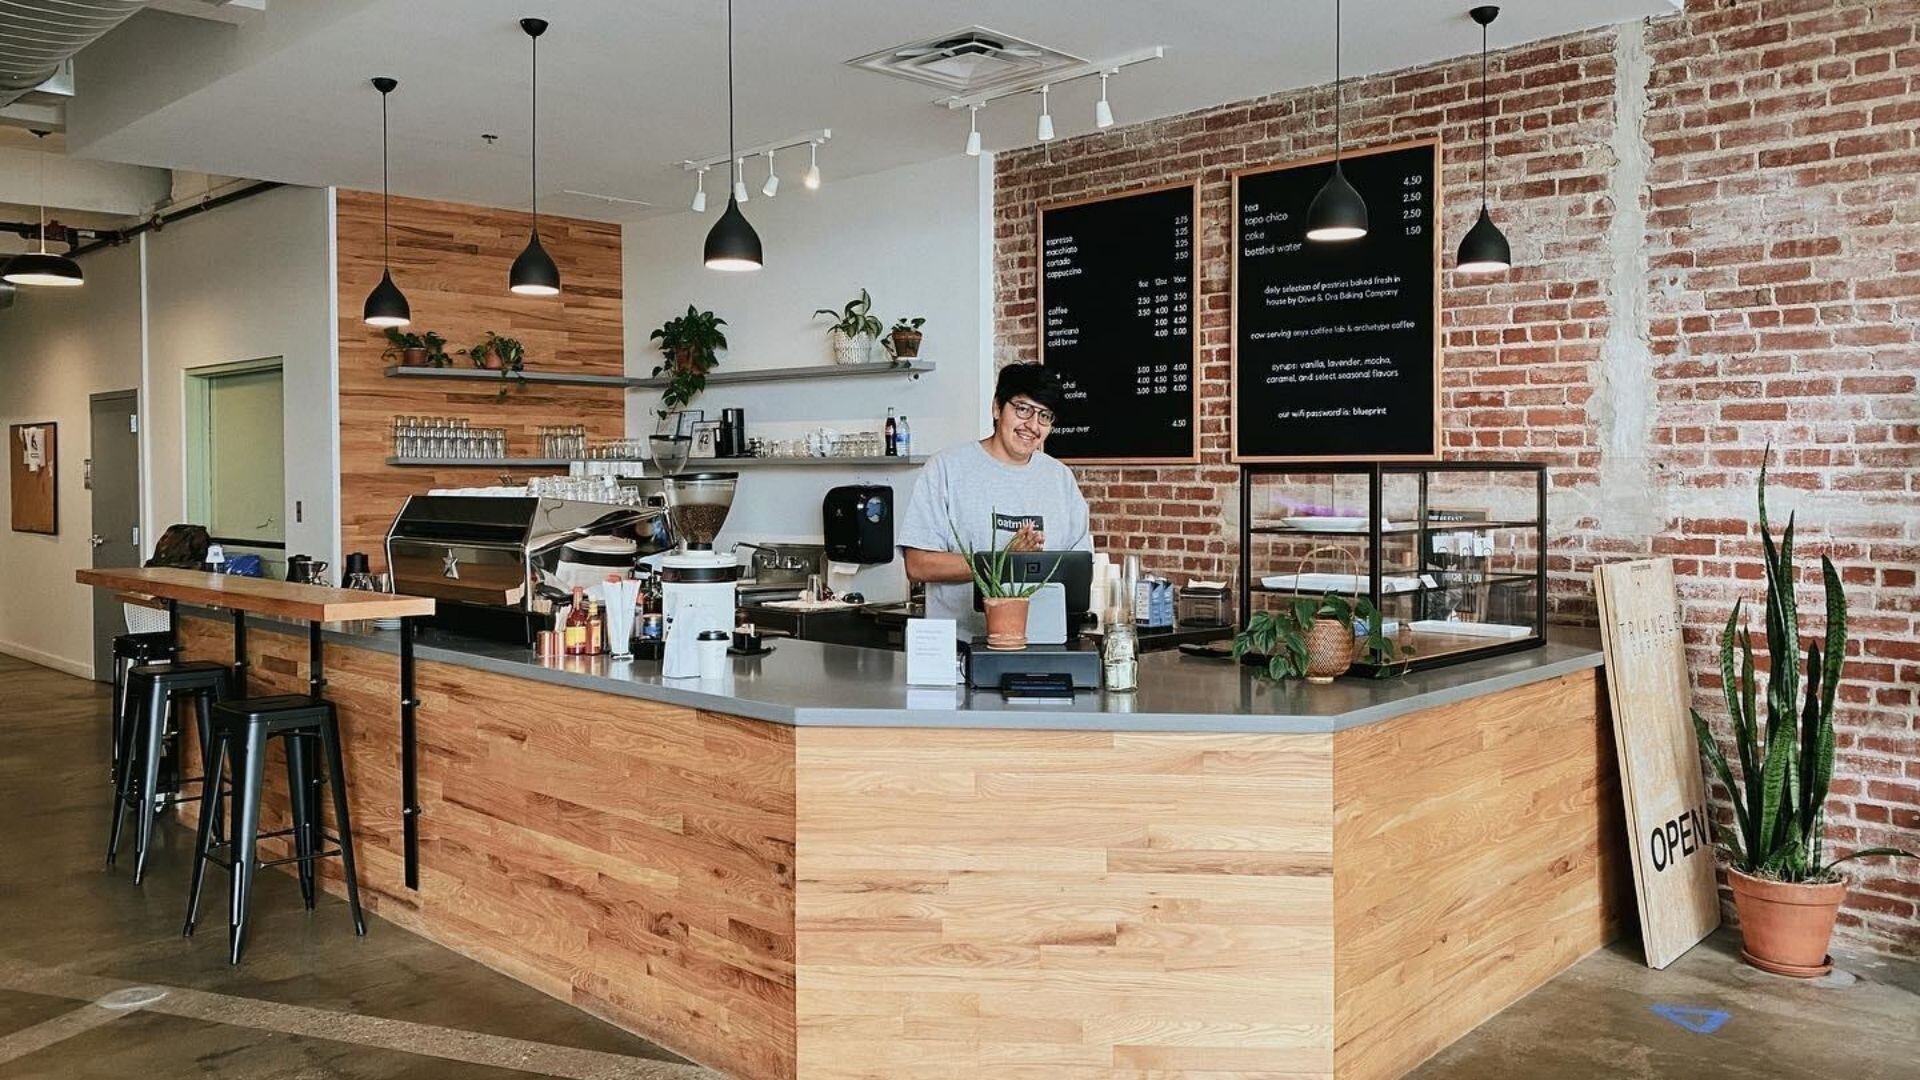 Triangle Coffee in Downtown Tulsa OK USA - Explore Local Coffee Shops with TulsaGo.jpg